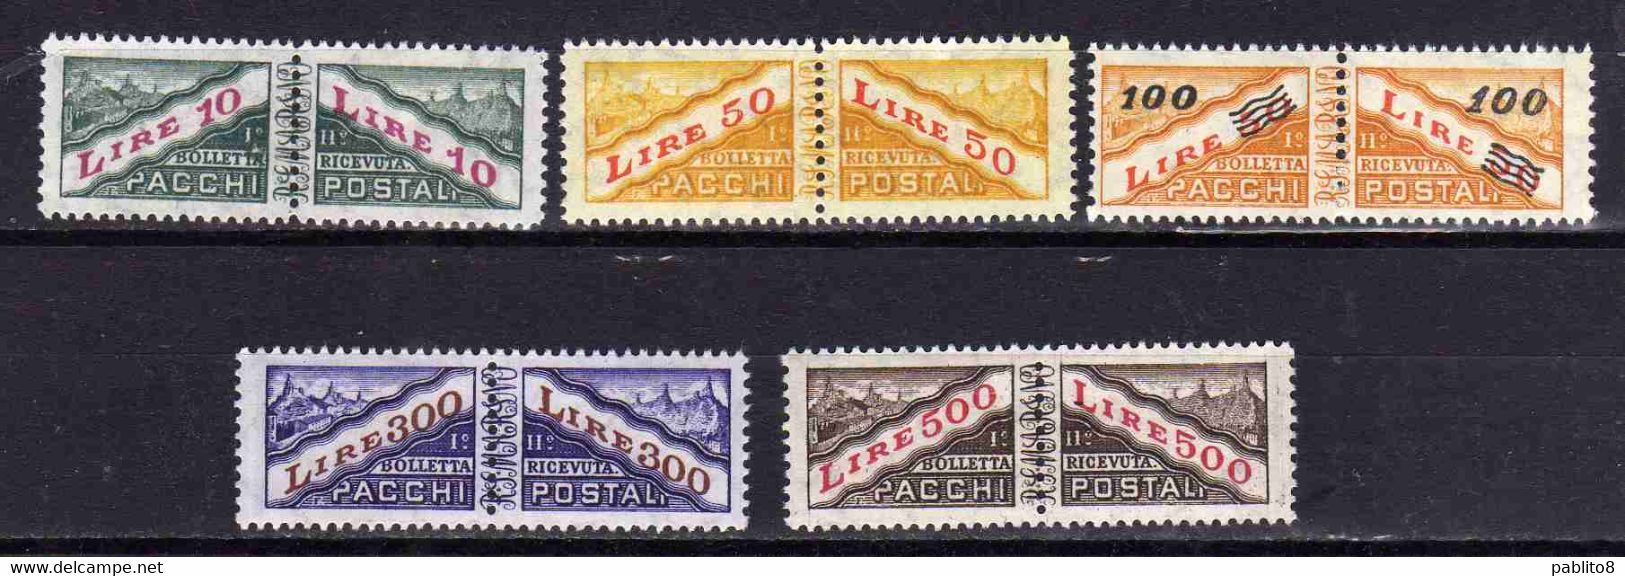 SAN MARINO 1956 1961 PACCHI POSTALI PARCEL POST STELLE STARS SERIE COMPLETA COMPLETE SET MNH - Parcel Post Stamps